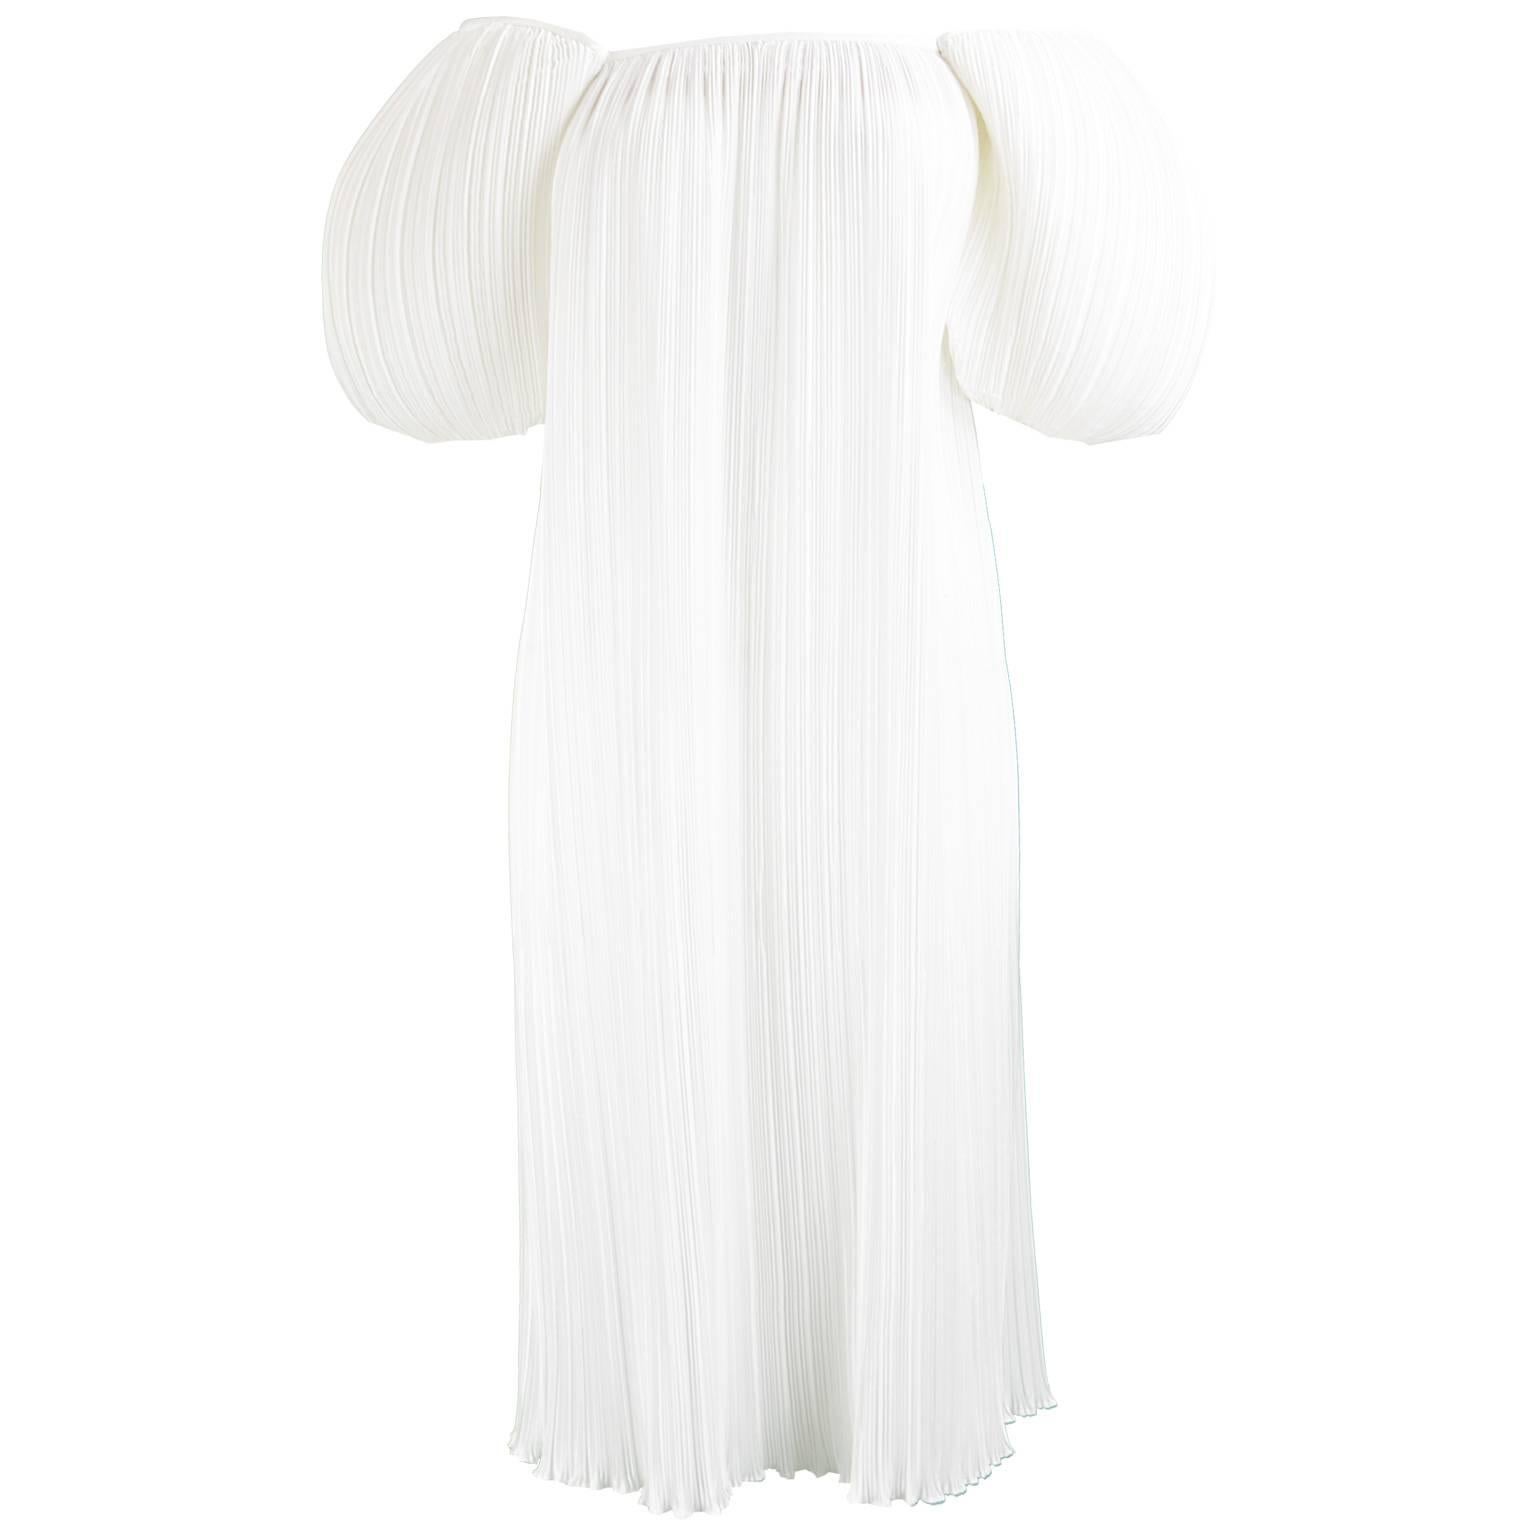 S.G. Gilbert for I. Magnin Ethereal White Vintage Fortuny Pleat Dress, 1980s